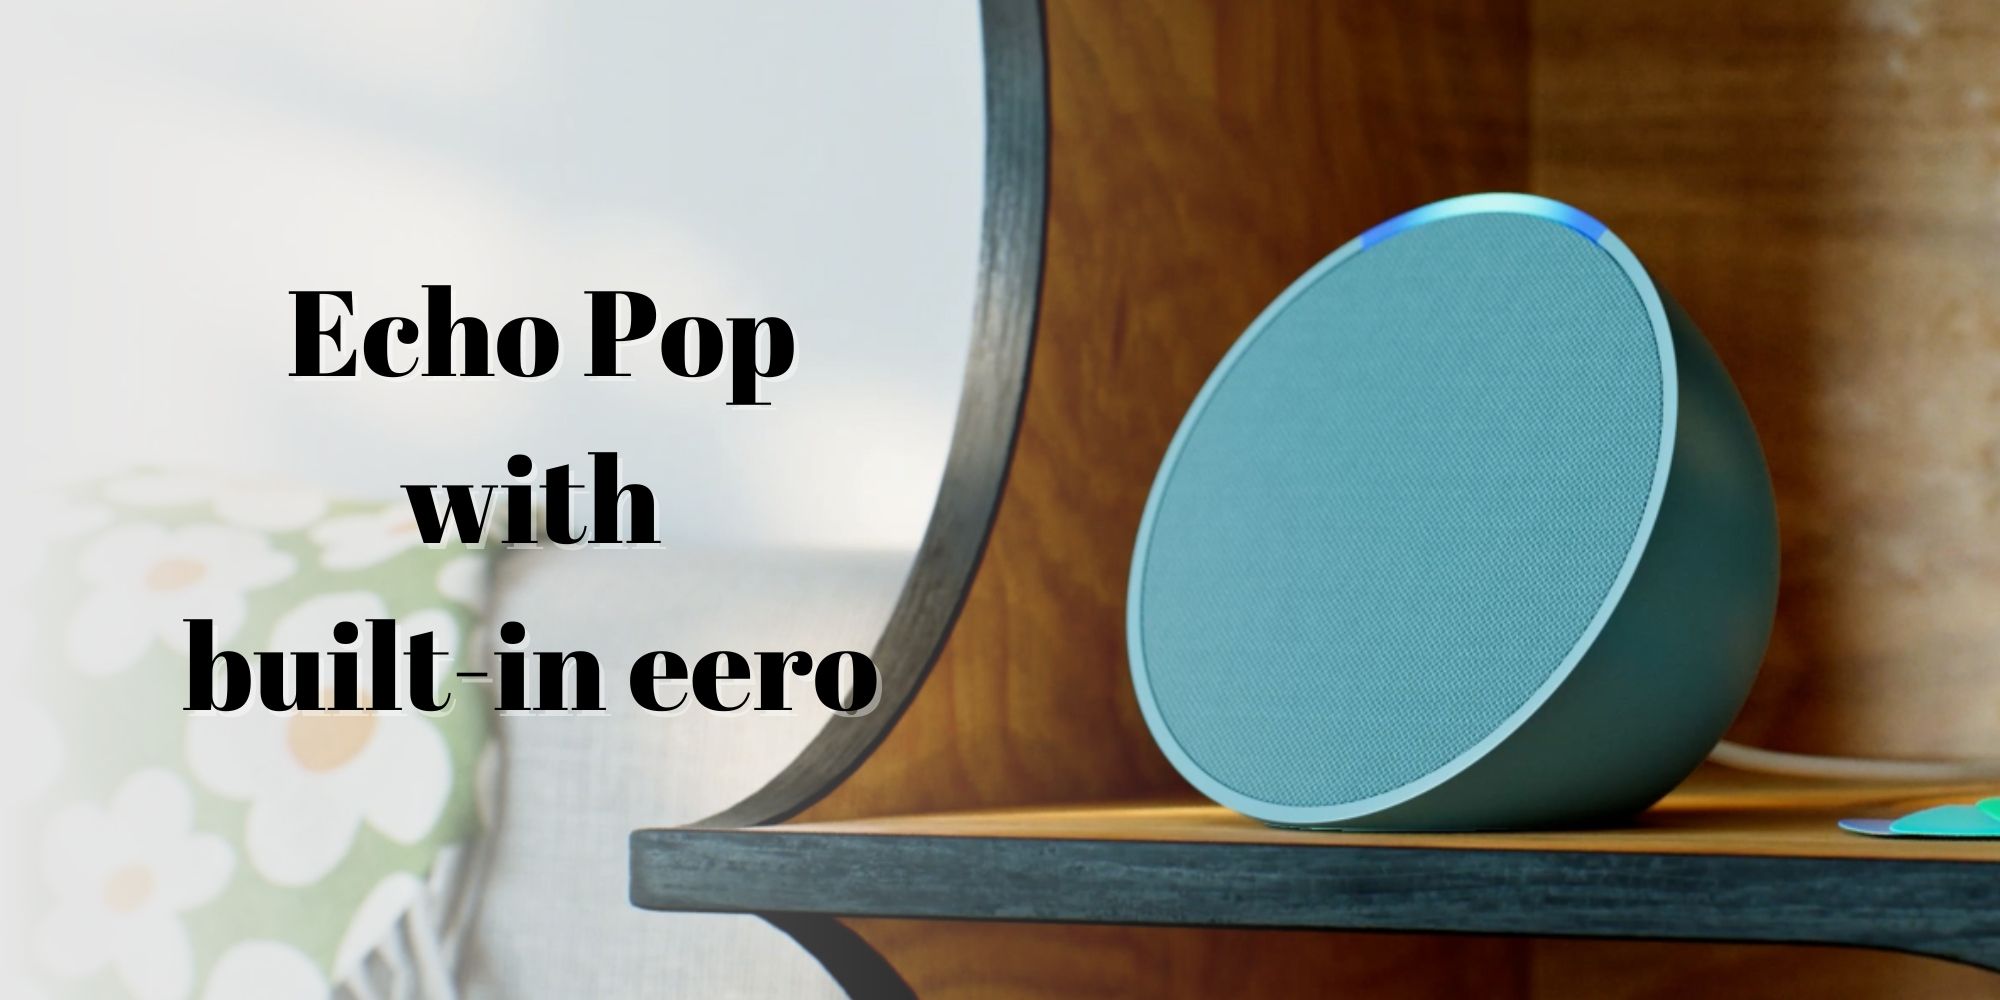 Echo Pop with built-in eero Wi-Fi extender